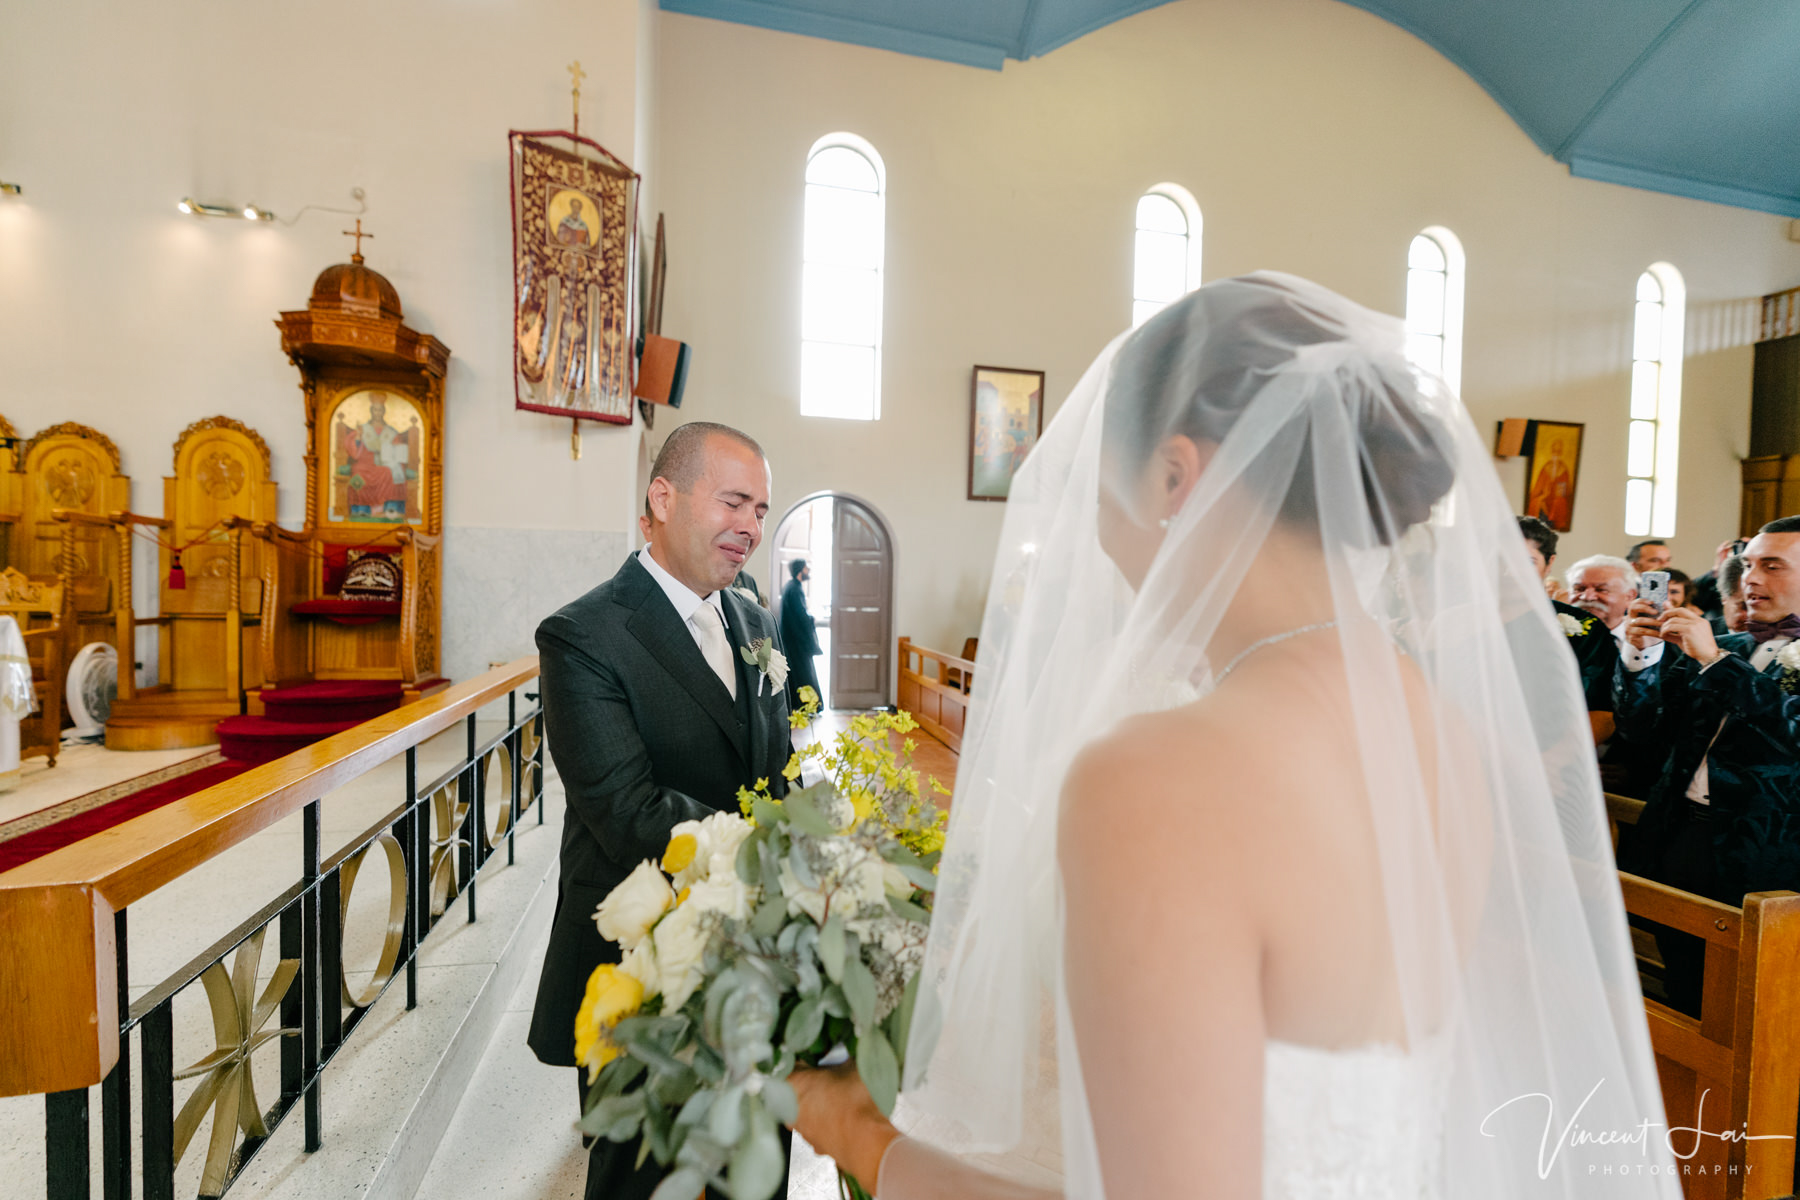 Wedding at St Nicholas Greek Orthodox Church and Sergeants Mess Reception